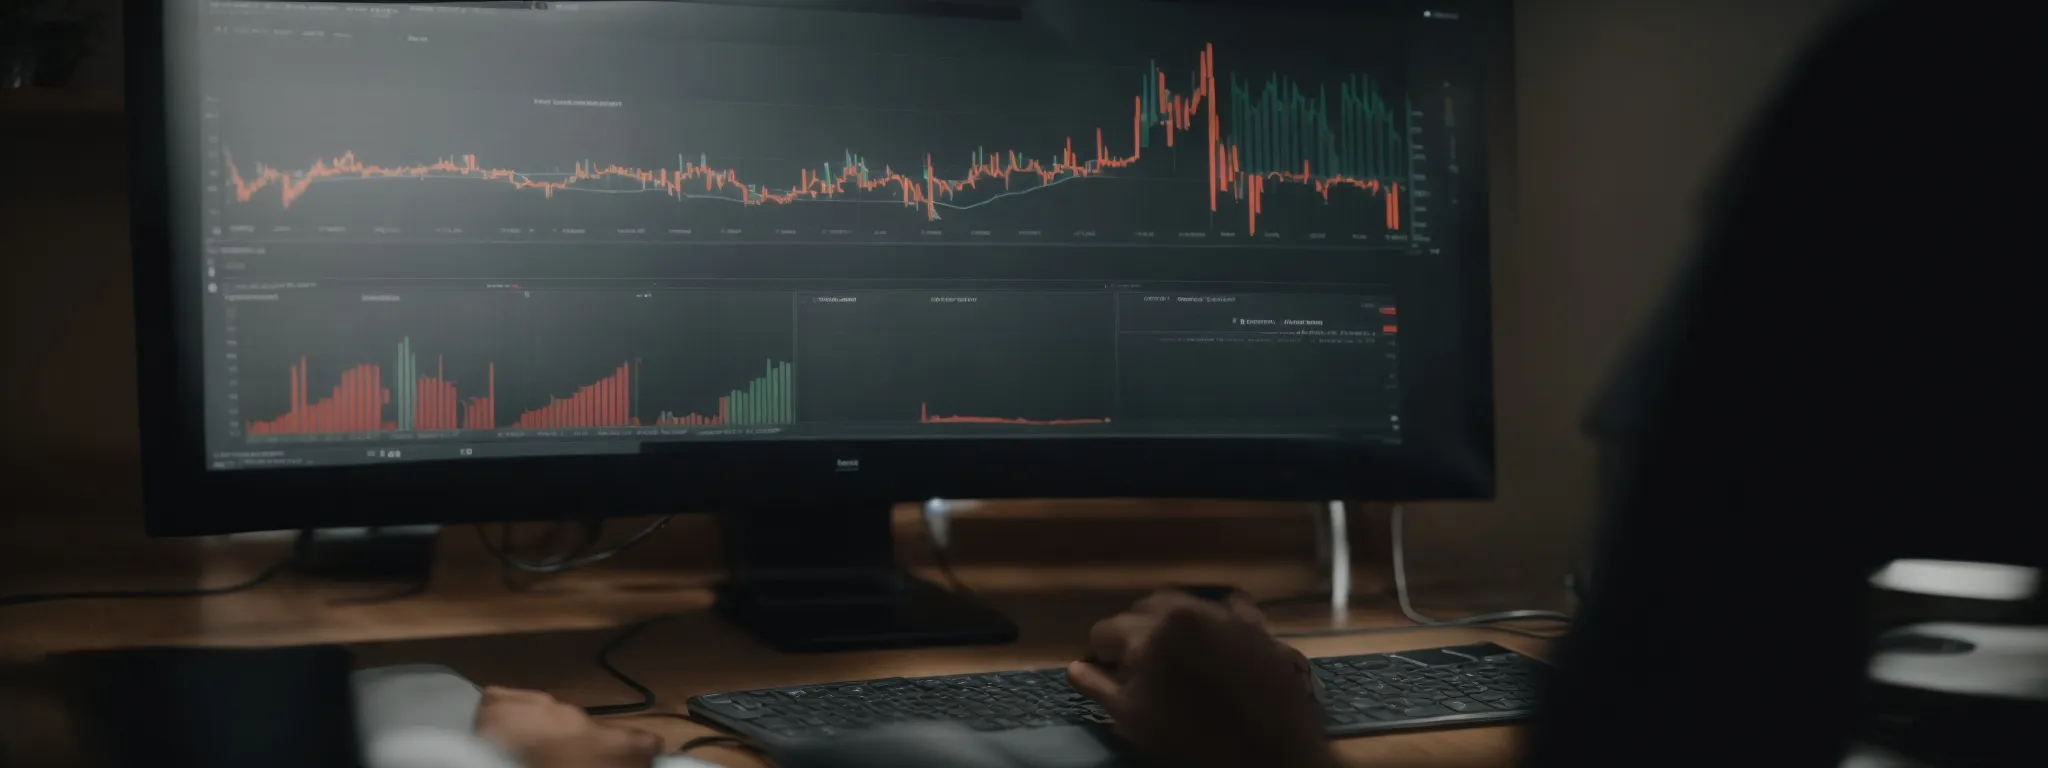 a marketer analyzes a graph showing an upward trend in website traffic on a computer screen.